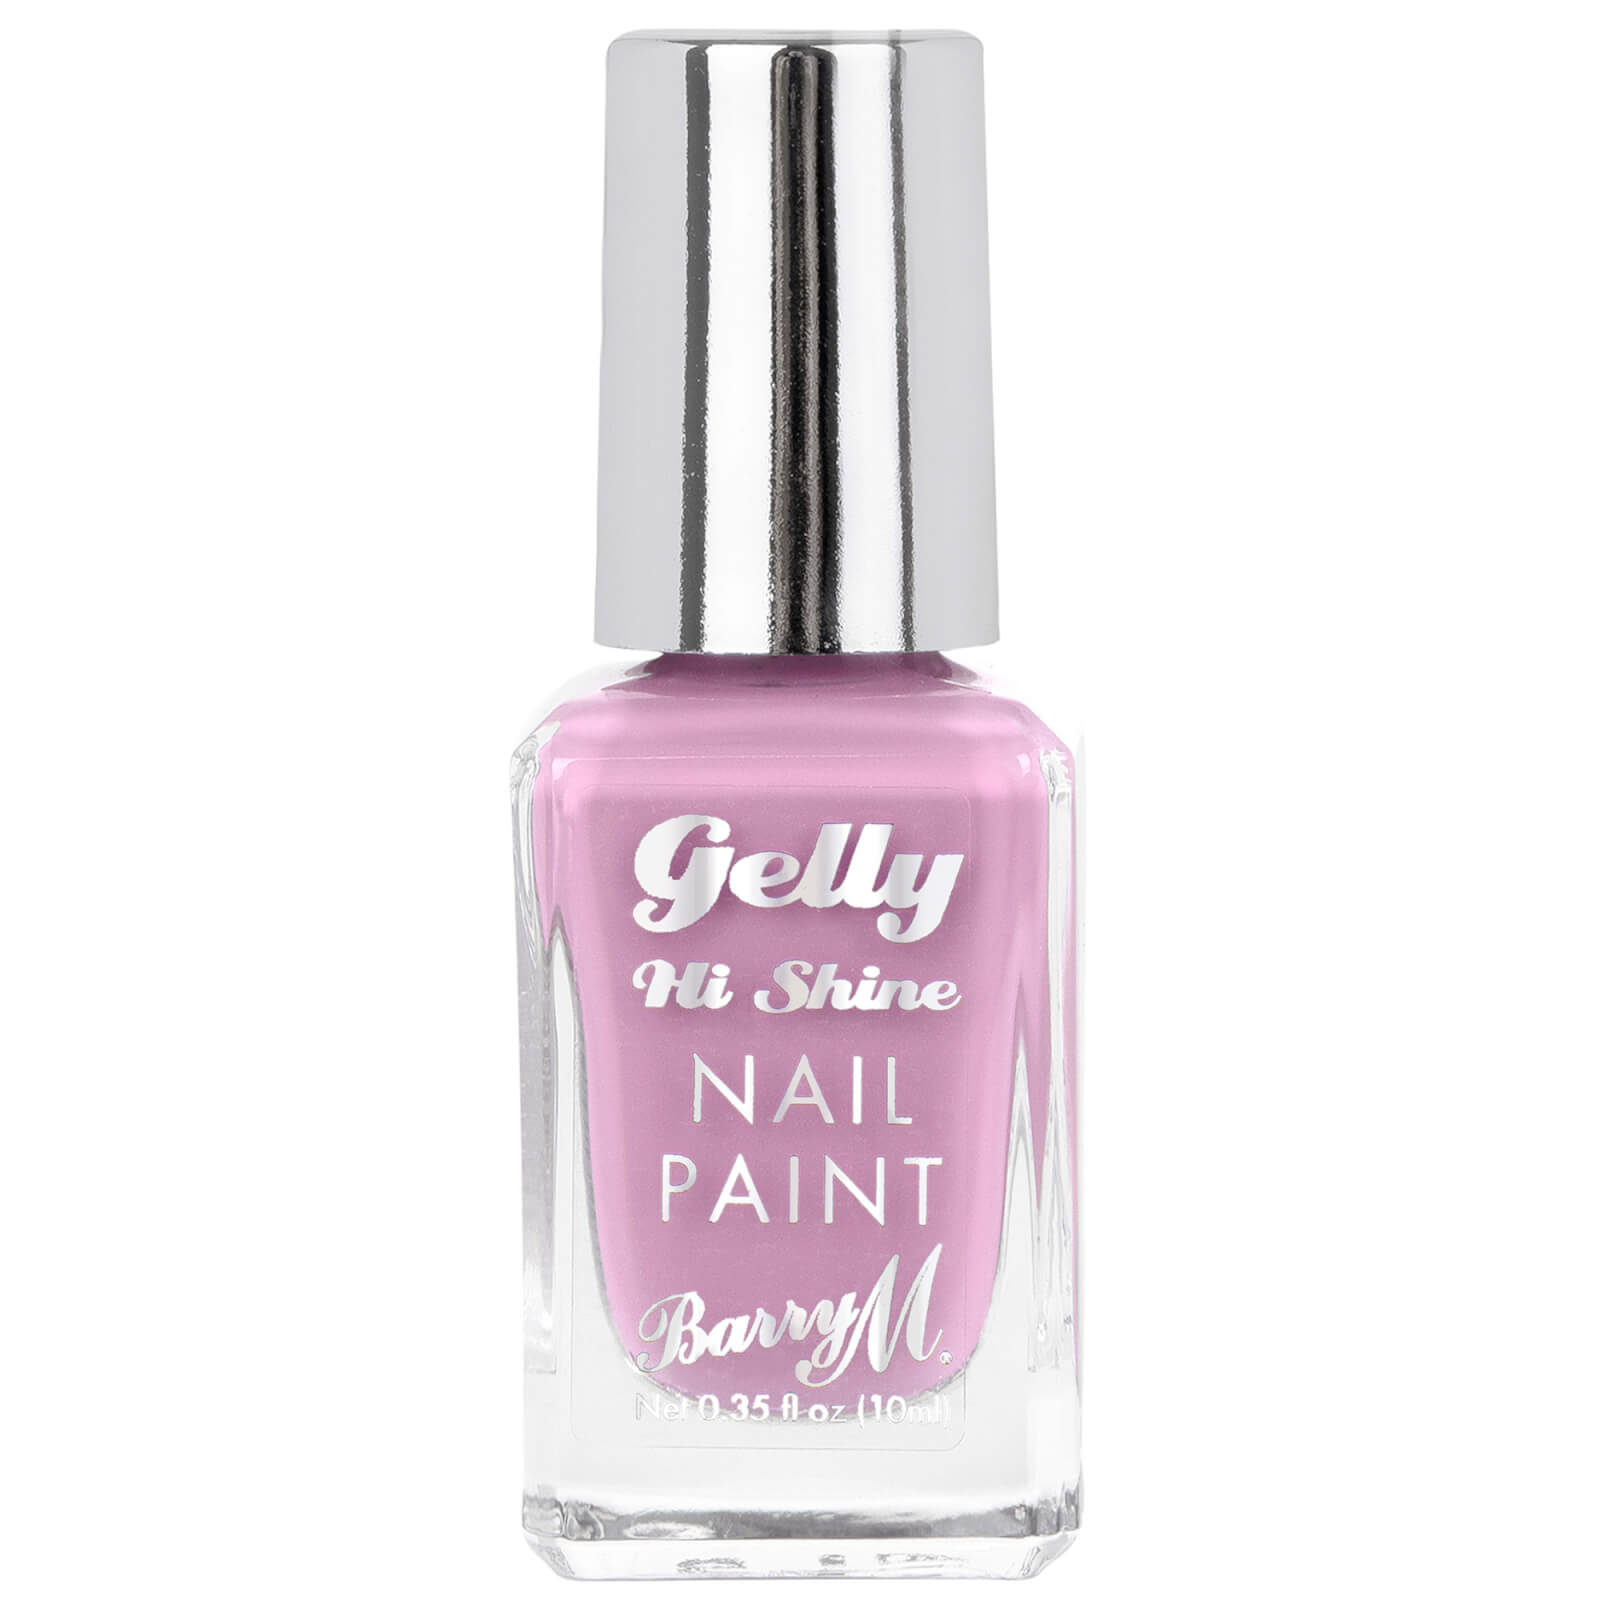 Barry M Cosmetics Gelly Hi Shine Nail Paint 10ml (Various Shades) - Peony